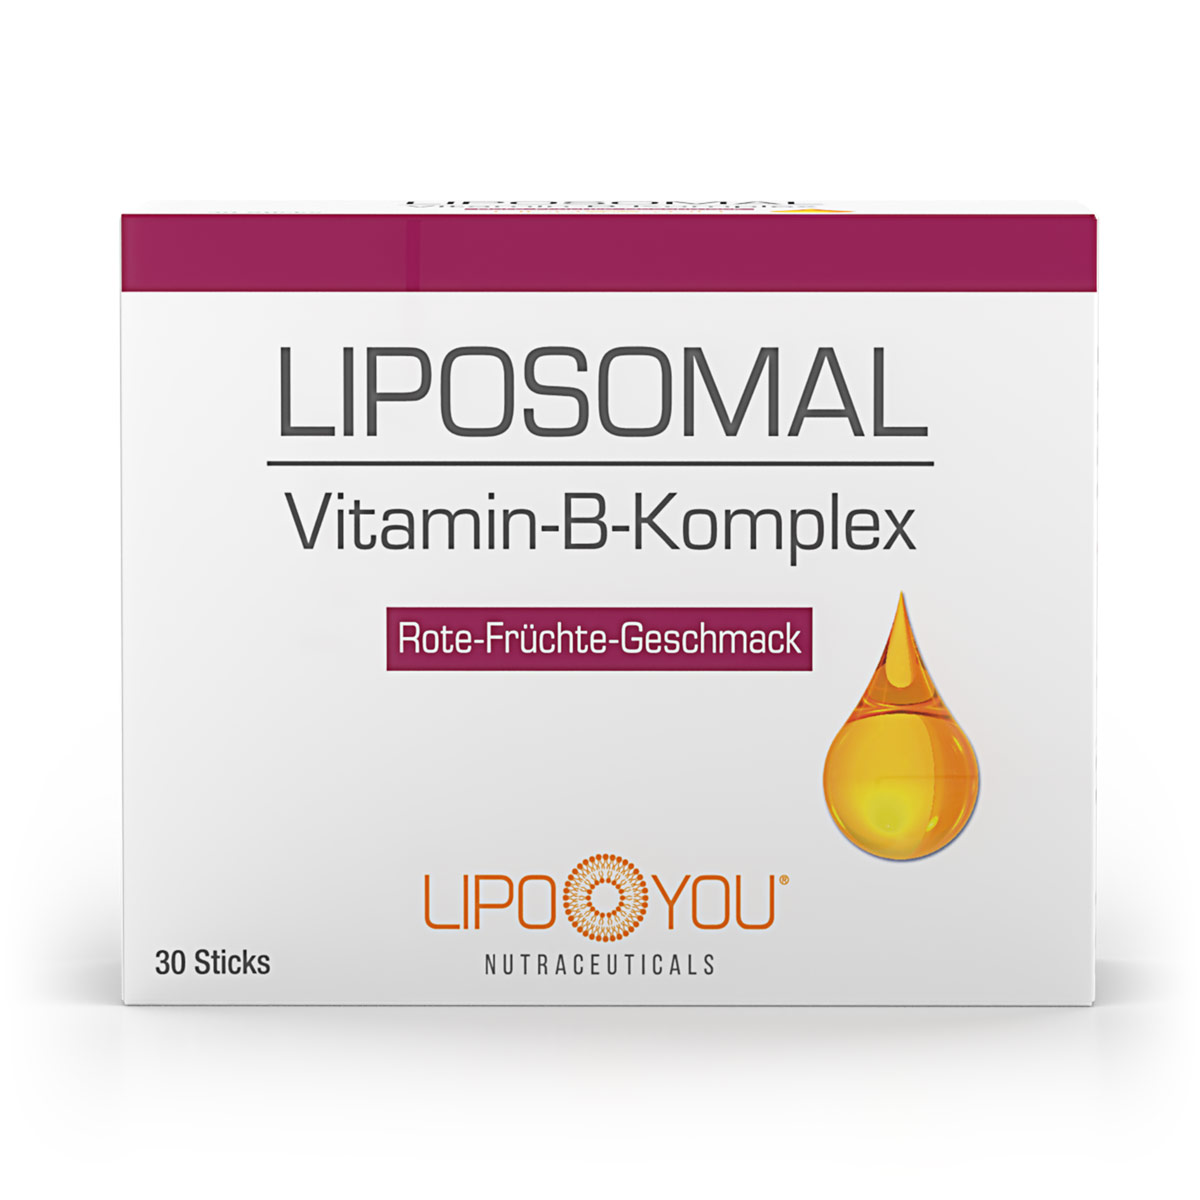 LIPOSOMAL Vitamin-B-Komplex Produktverpackung